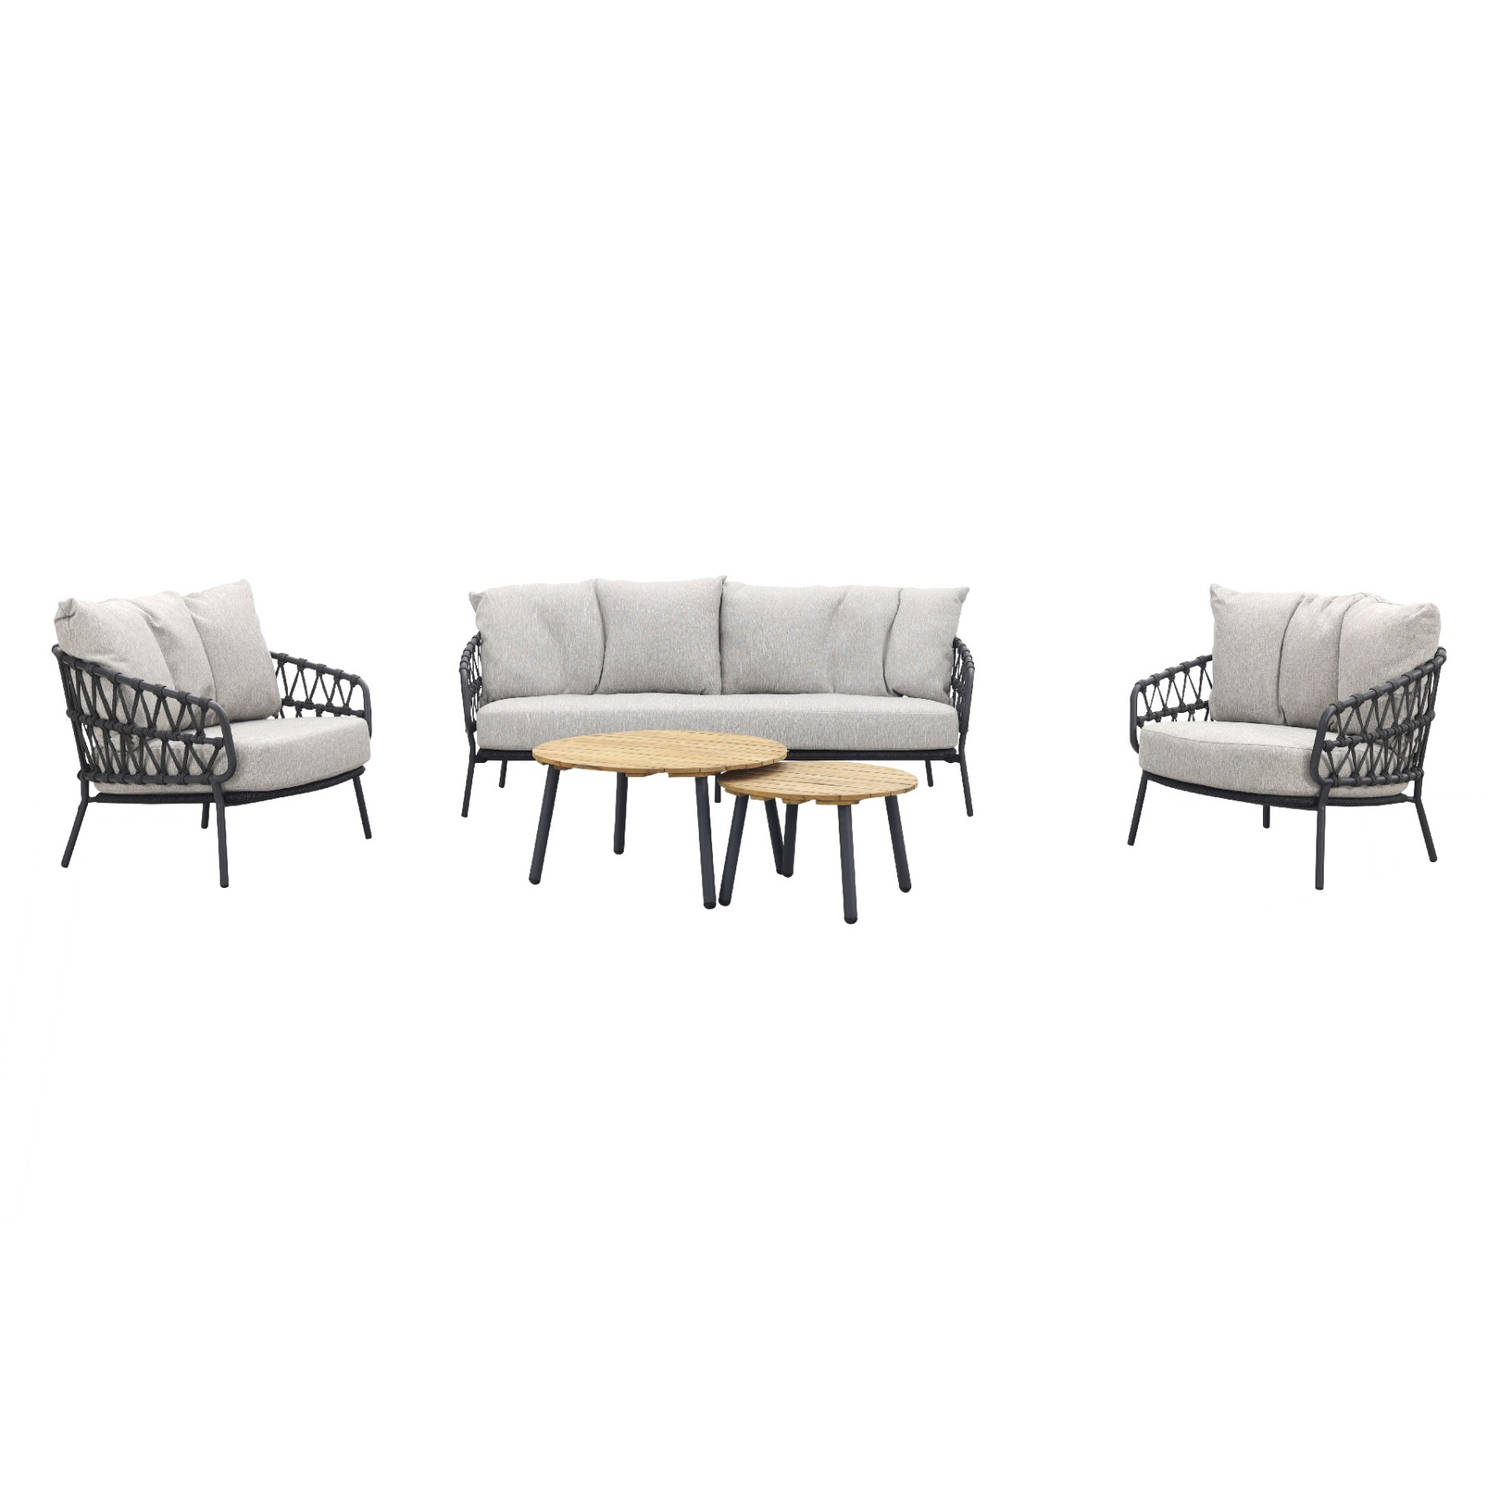 4 Seasons Calpi stoel-bank loungeset met Mindo koffietafels - 5-delig